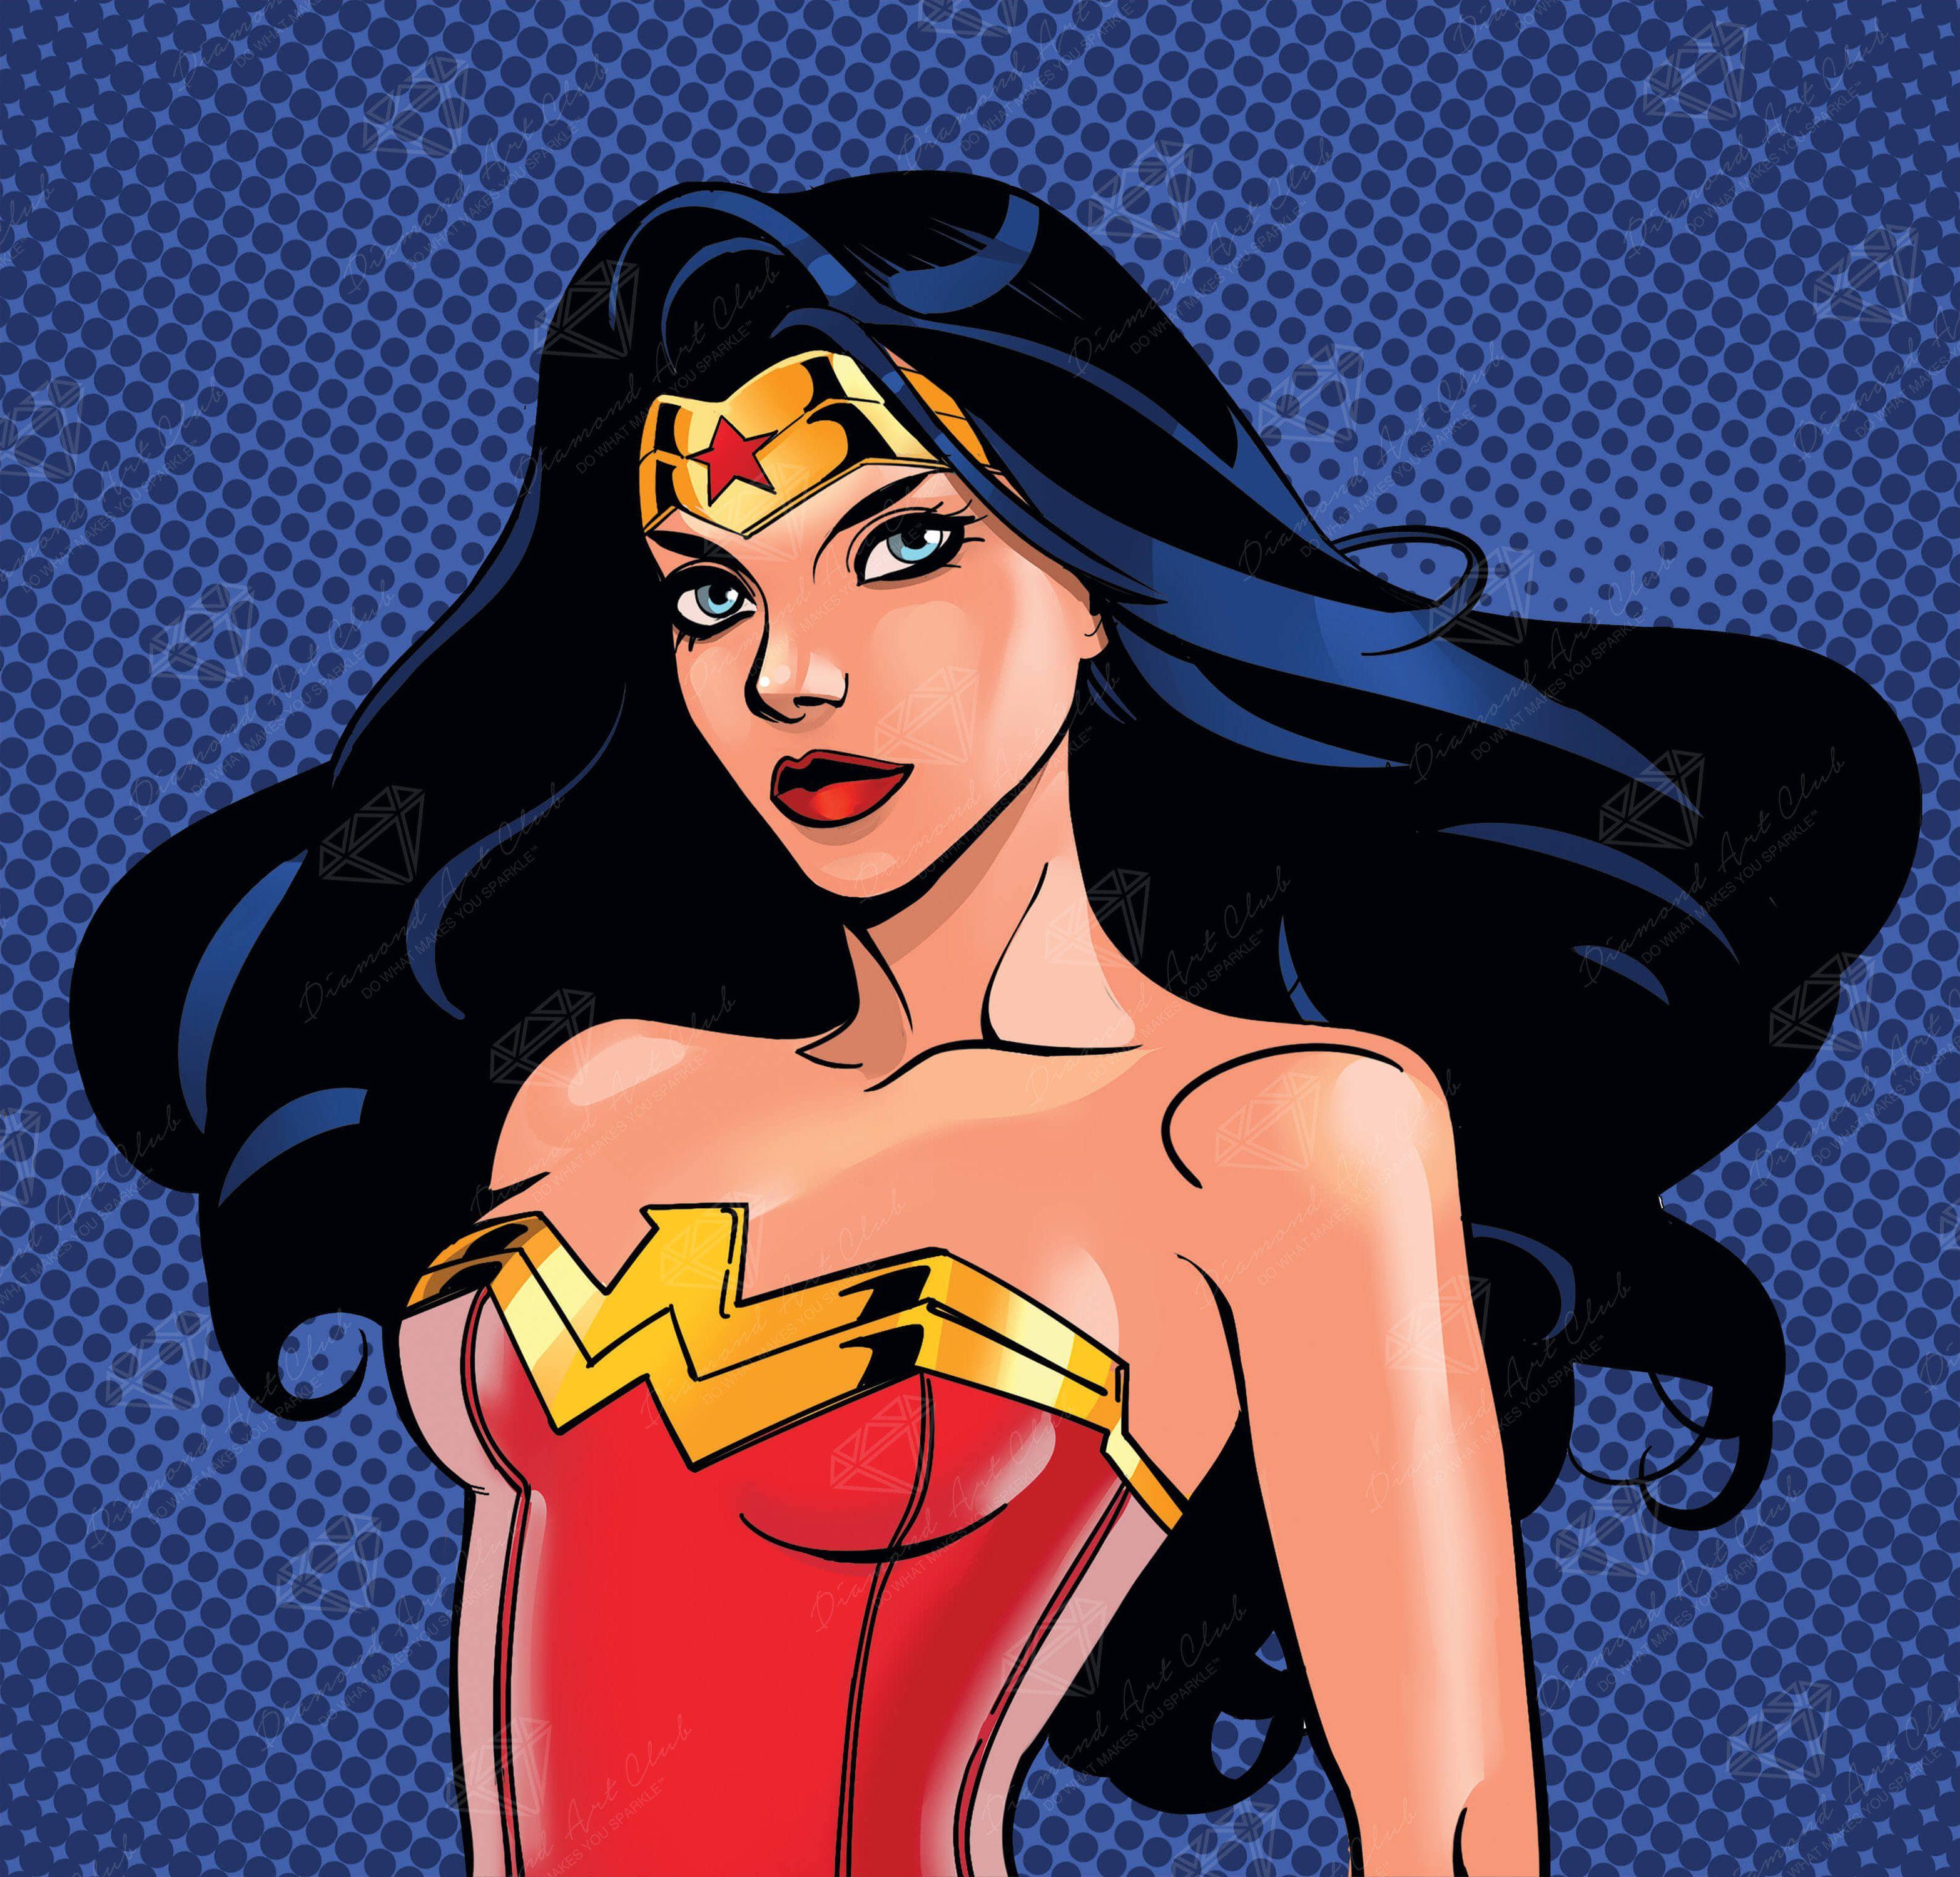 Rubie's womens Dc Comics Wonder Woman Corset Costume